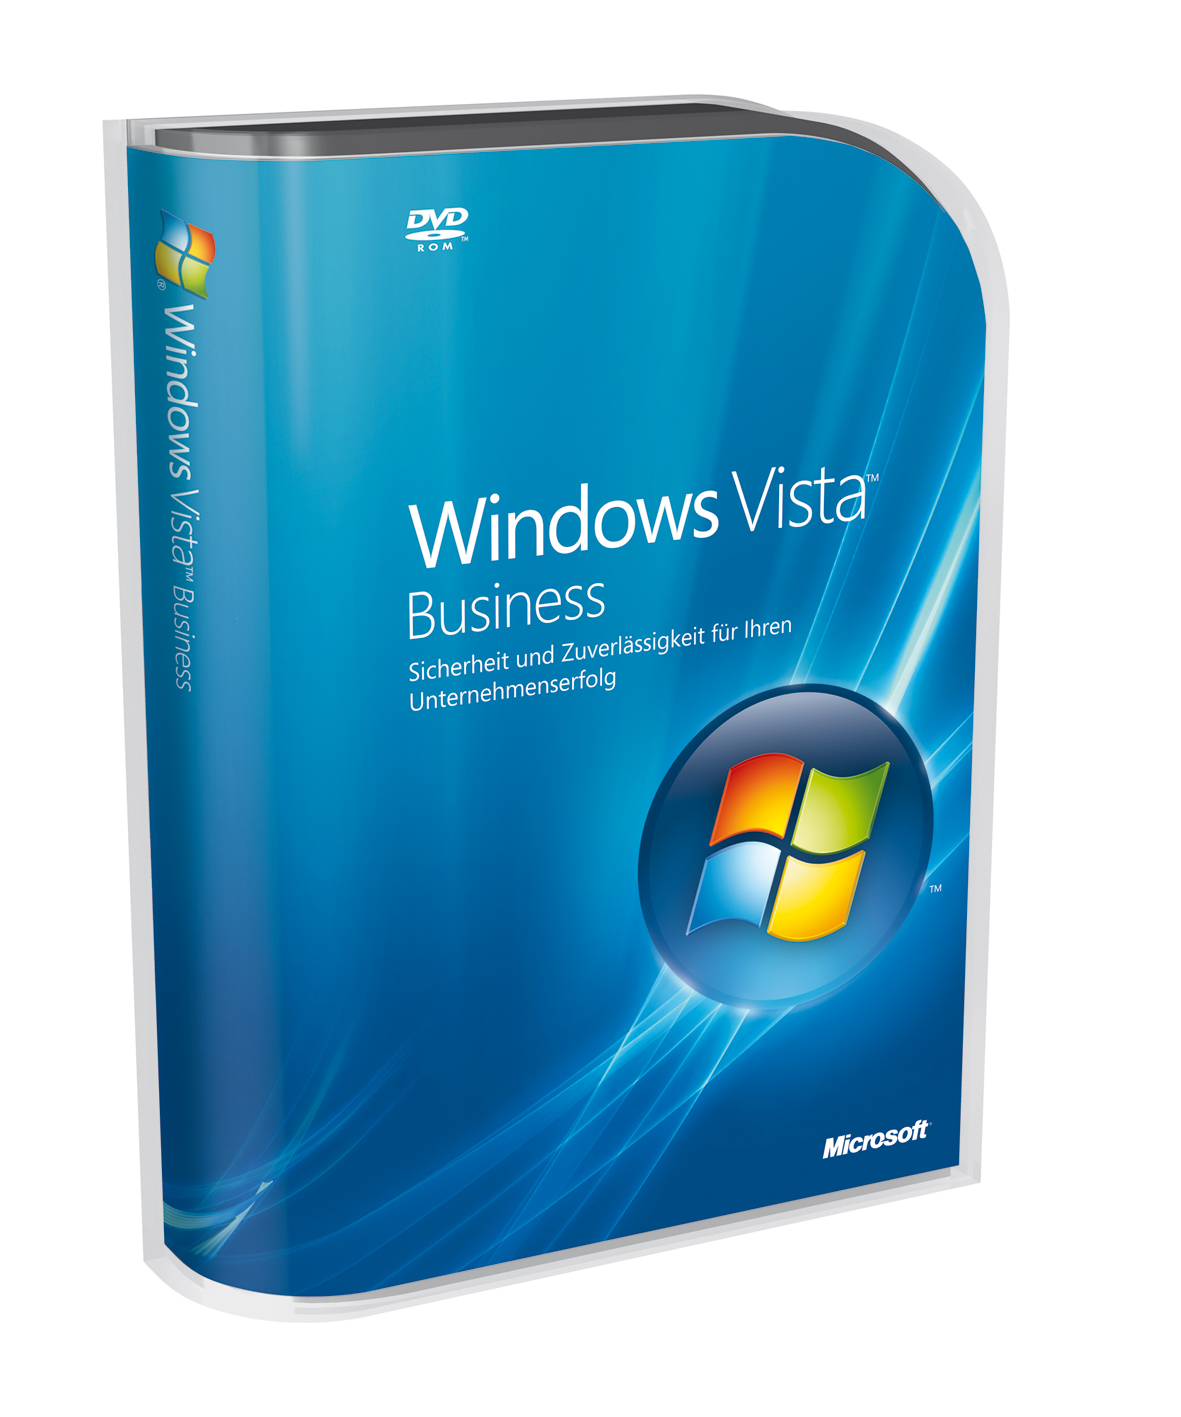 Microsoft Windows Vista Business Full Version [dvd]